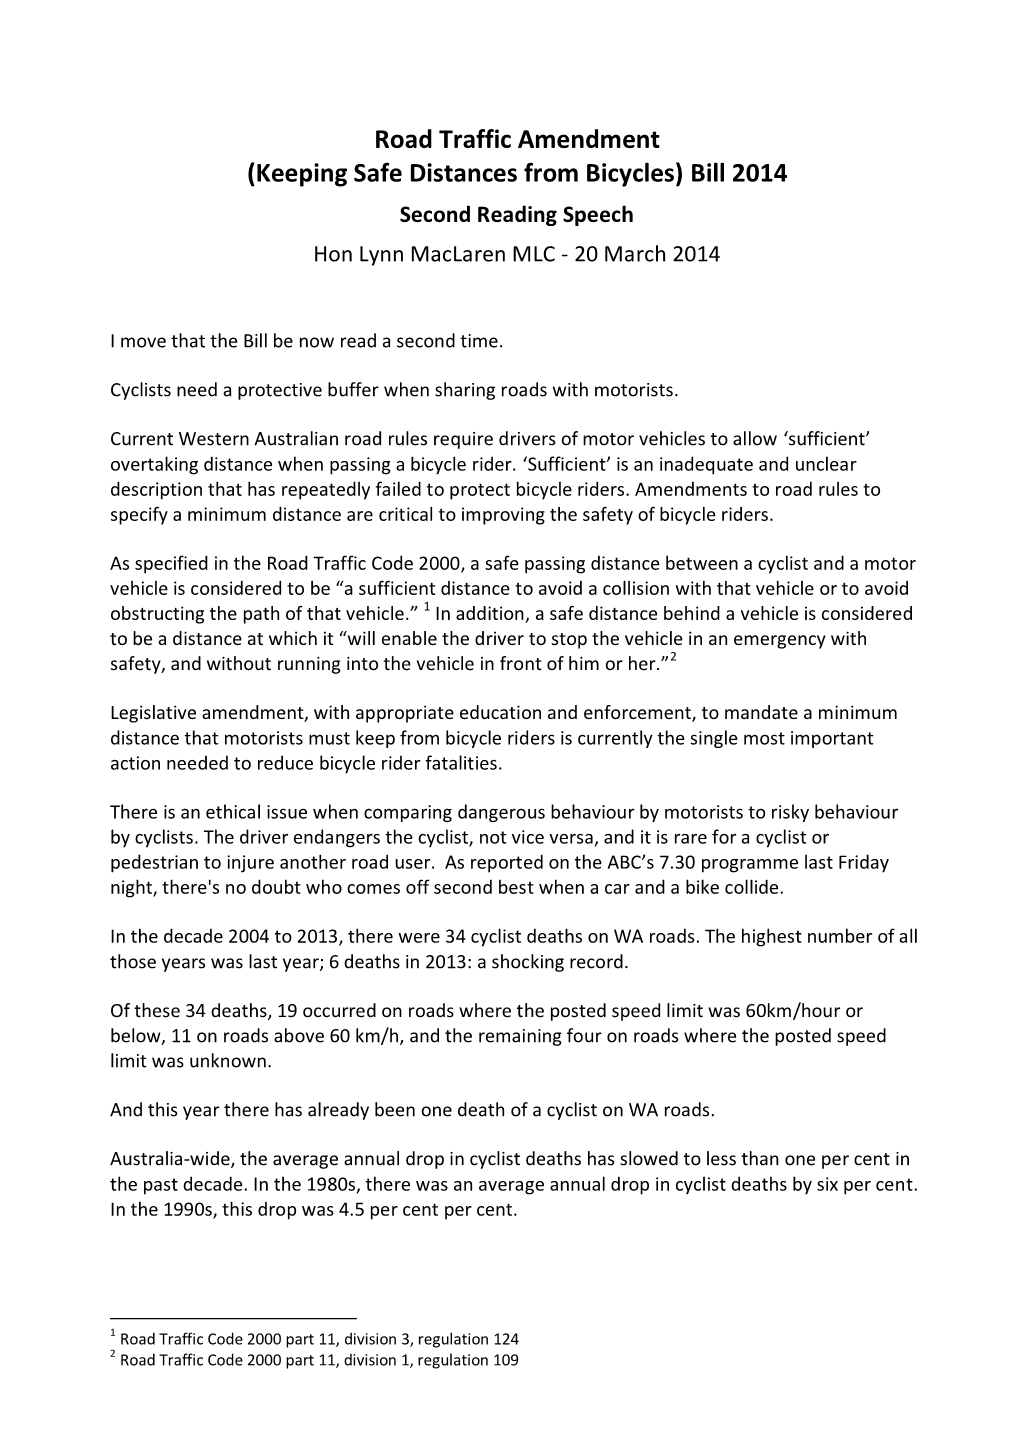 (Keeping Safe Distances from Bicycles) Bill 2014 Second Reading Speech Hon Lynn Maclaren MLC - 20 March 2014